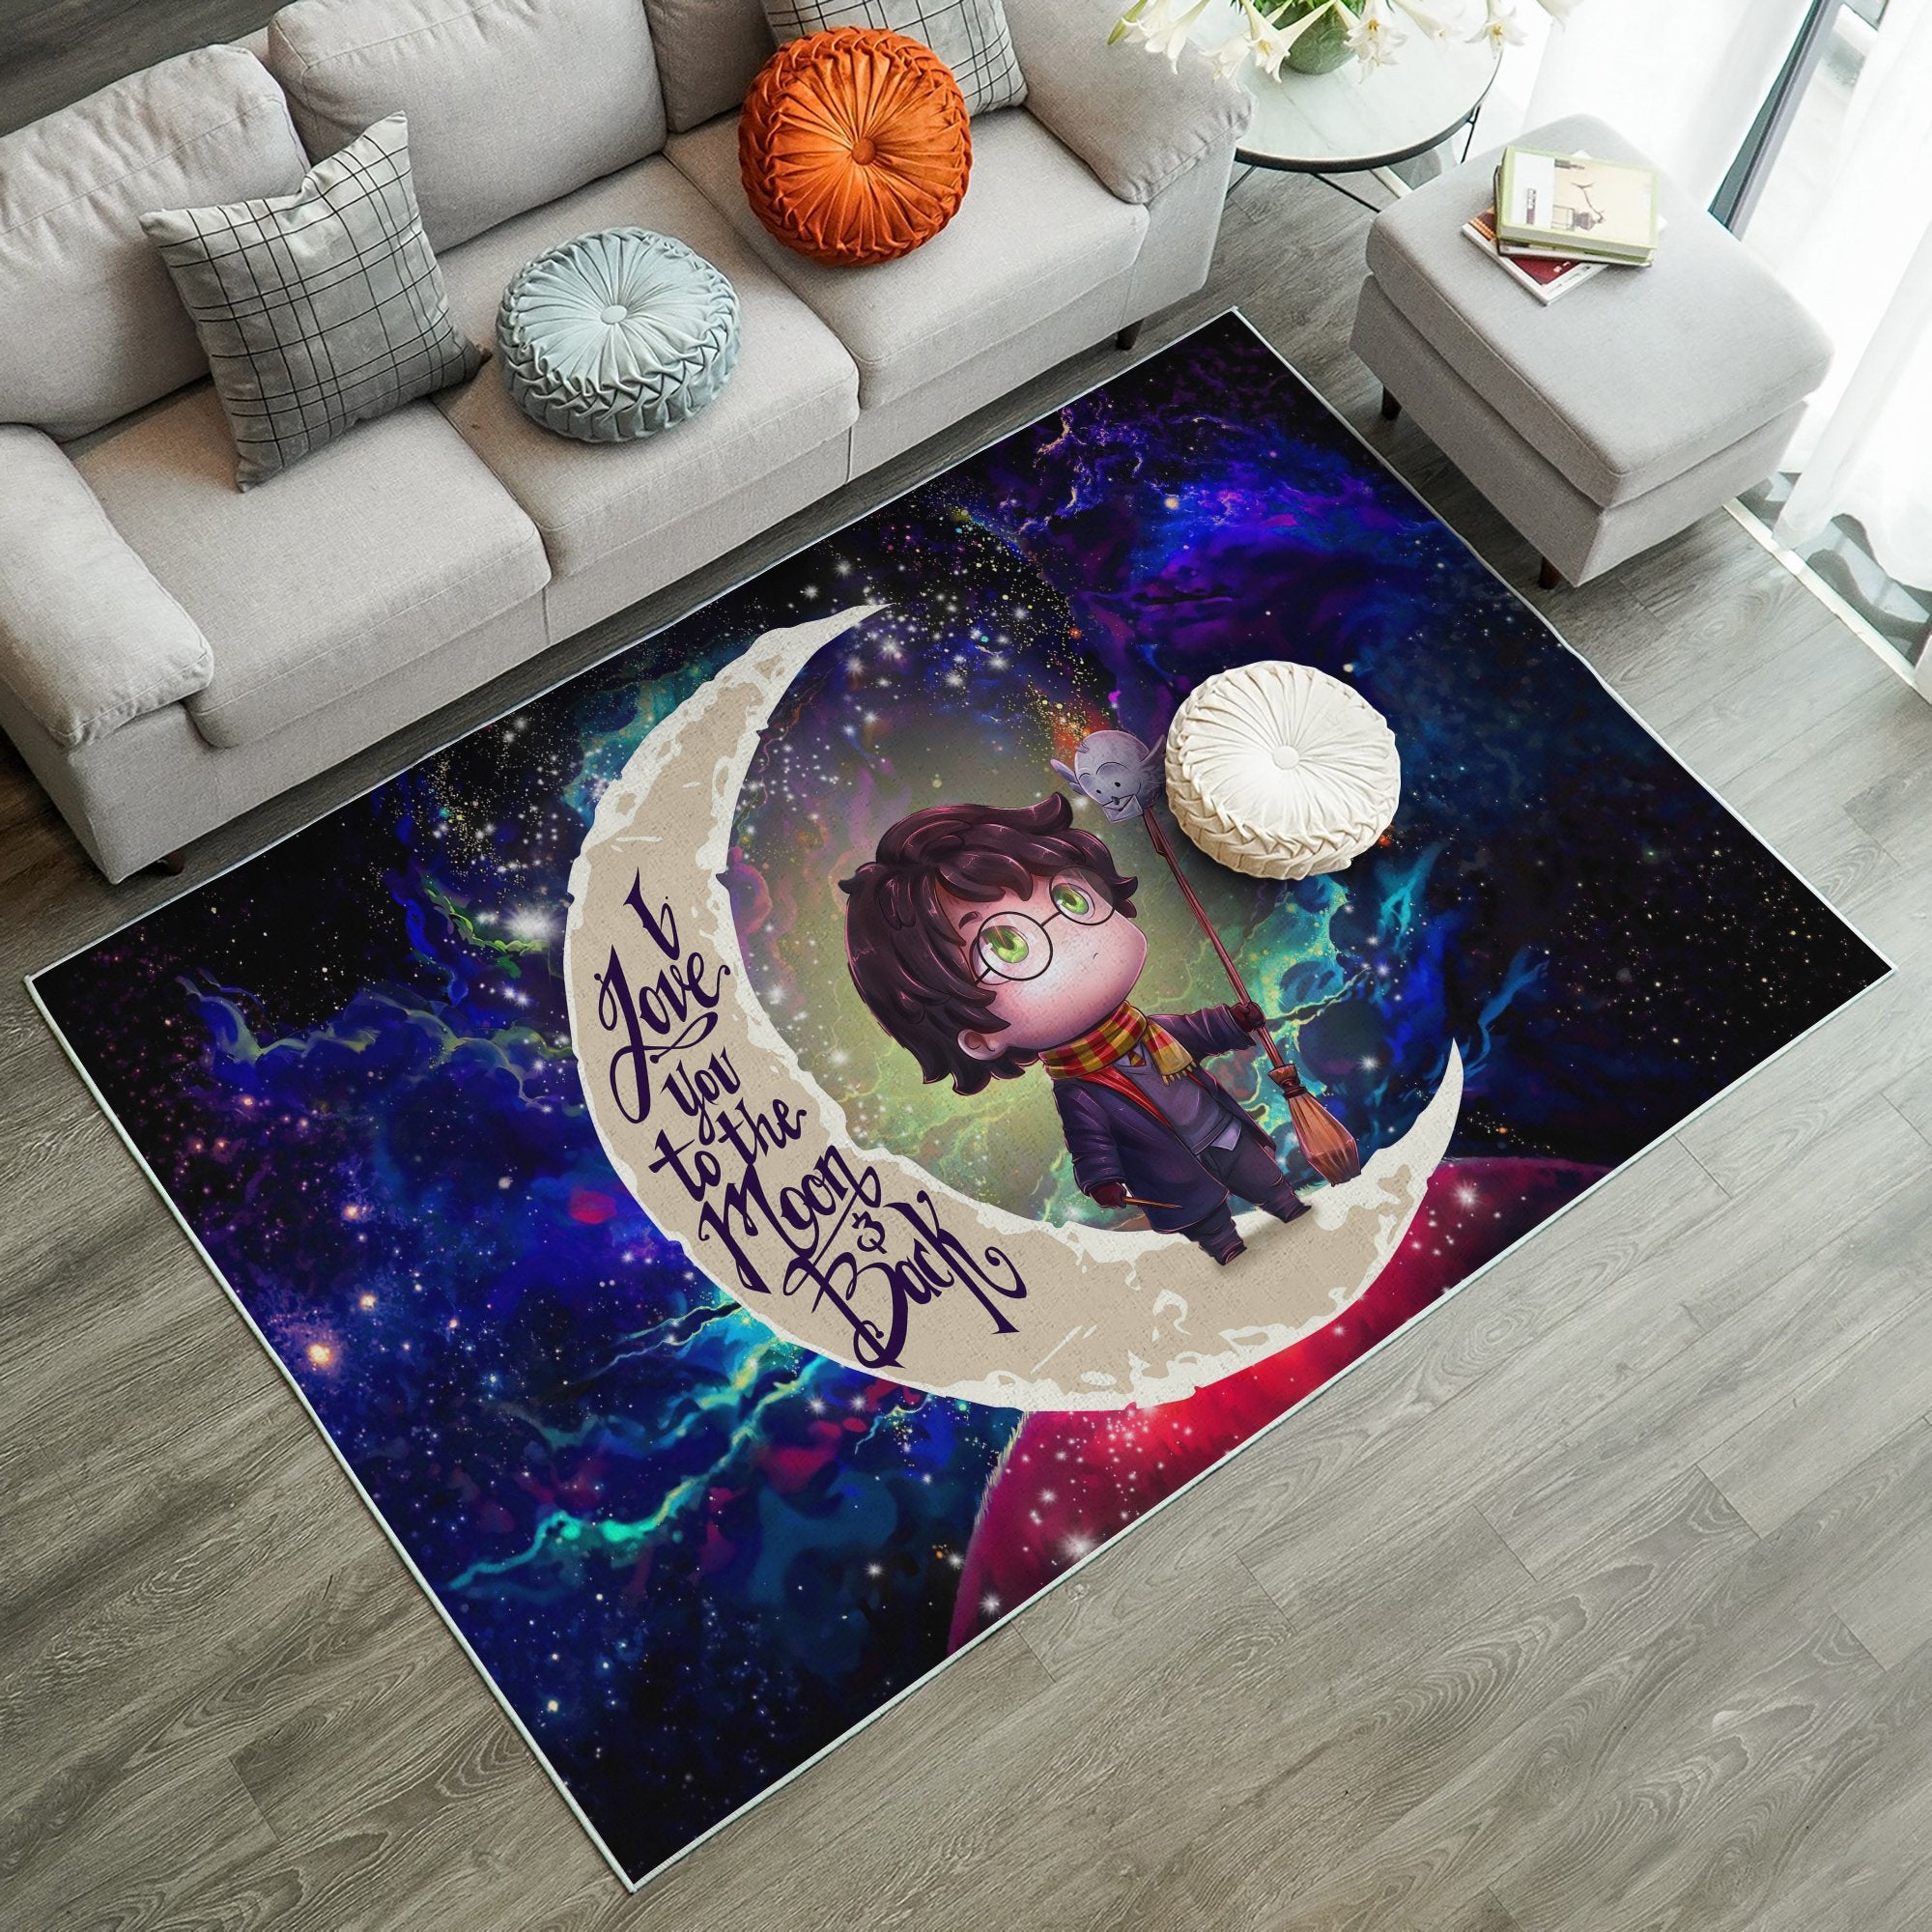 Harry Potter Chibi Love You To The Moon Galaxy Carpet Rug Home Room Decor Nearkii